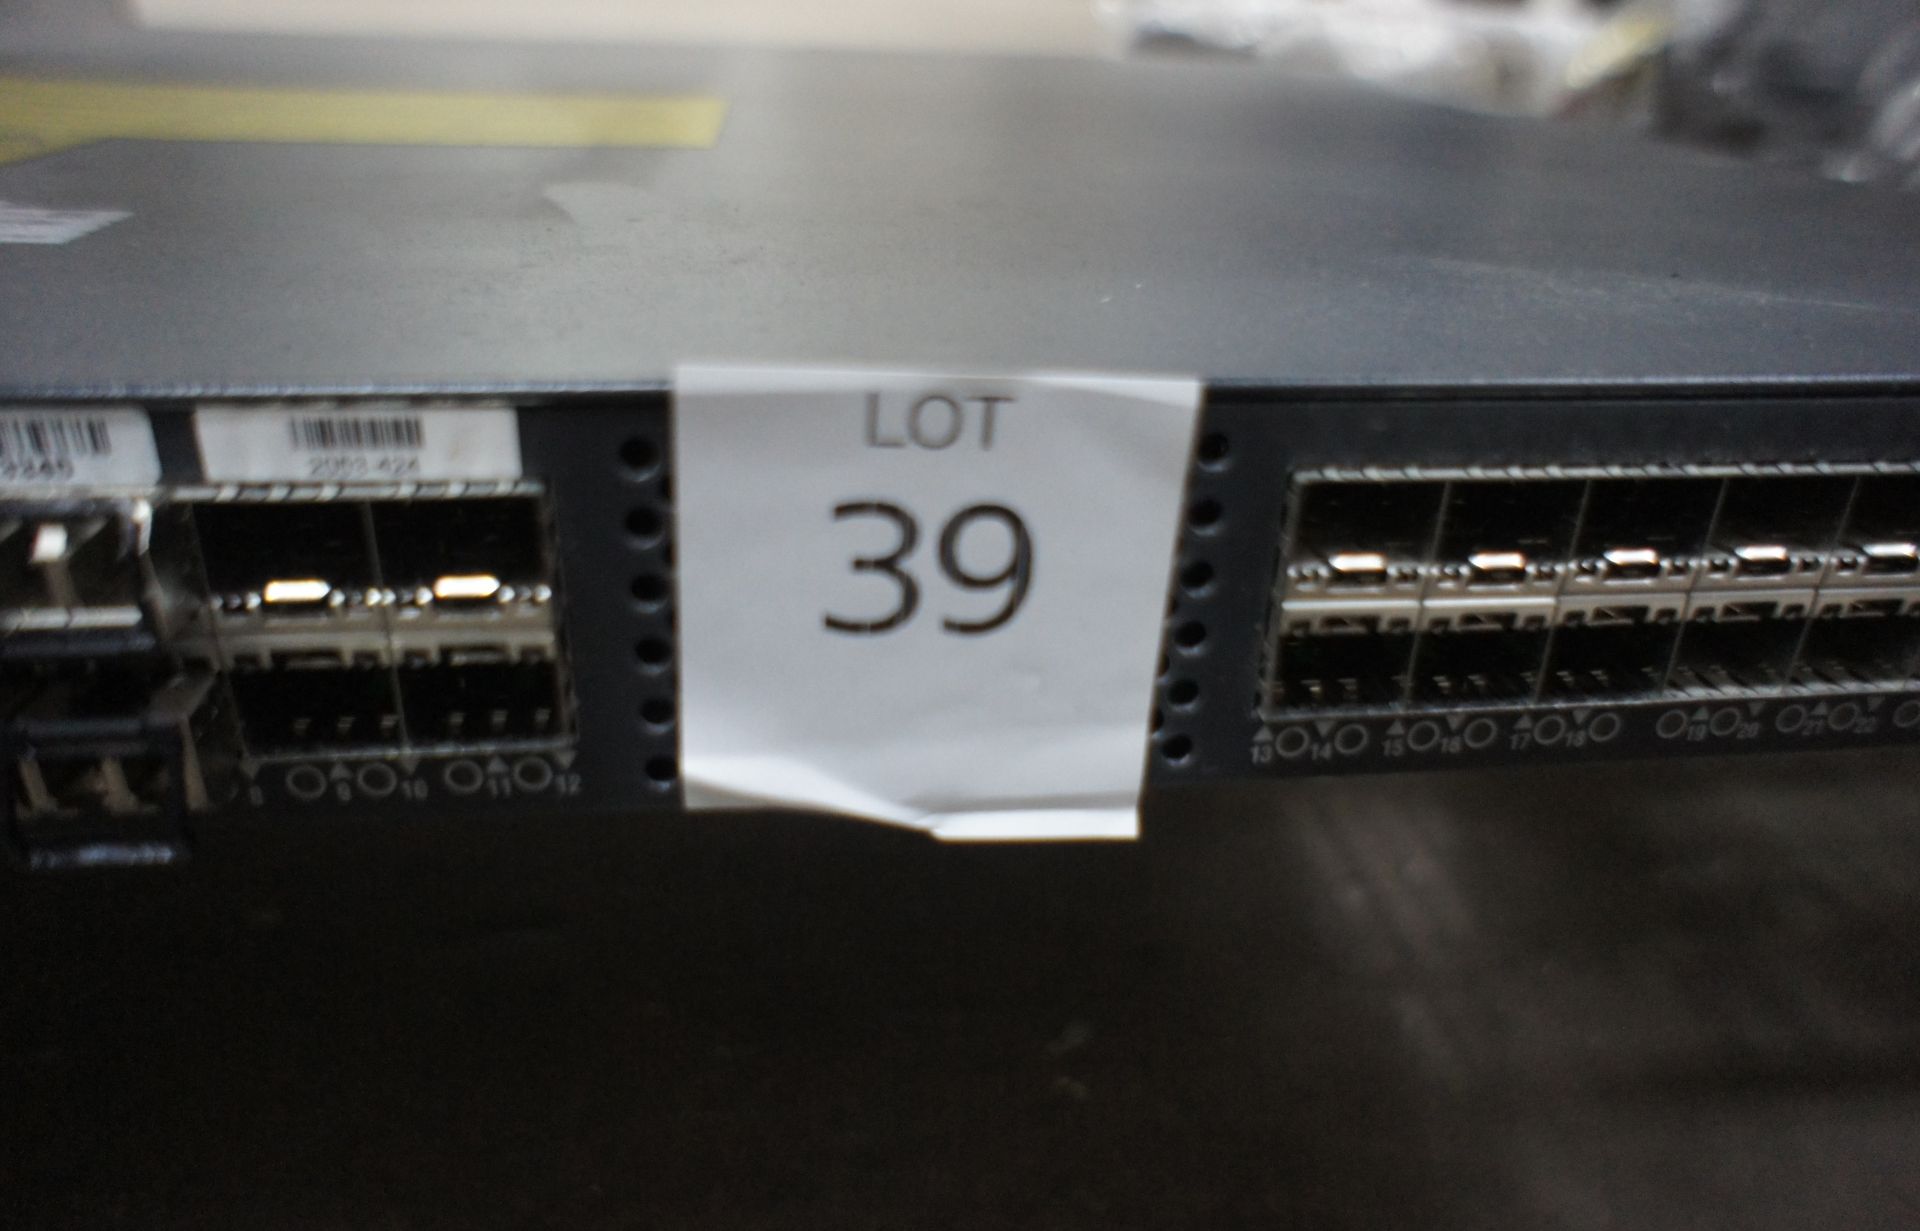 1 x HPE Procurve PSU for ProCurve GL/XL/VL switch, 1 x USD ZEN4 20501469 and 1 x Brocade 4900 switch - Image 28 of 31